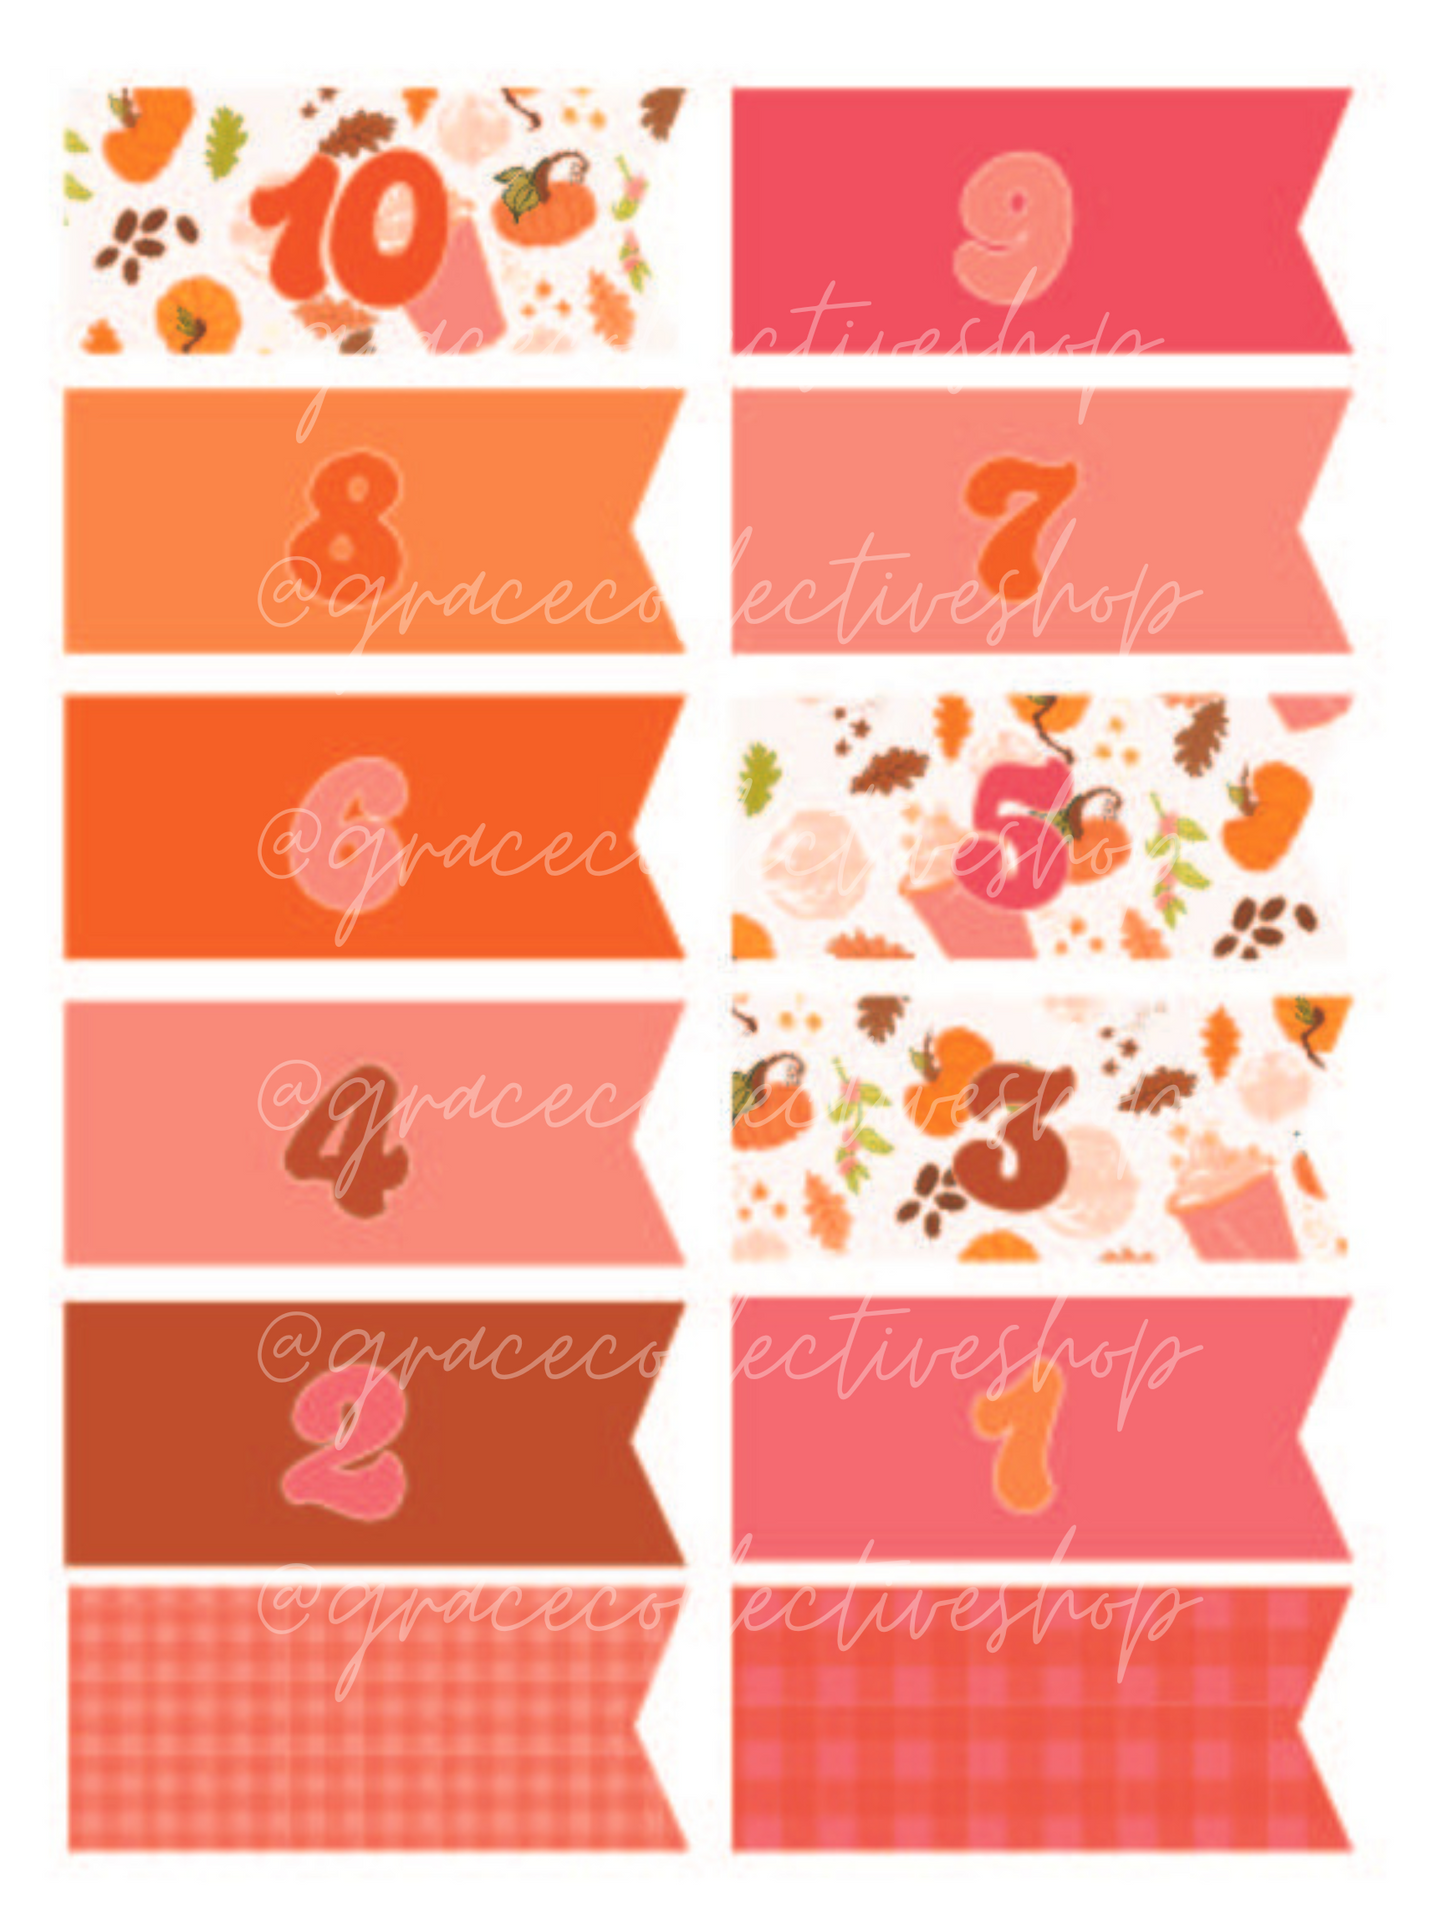 Pumpkin Spice Latte | Printable Collaboration with @jackiegblog